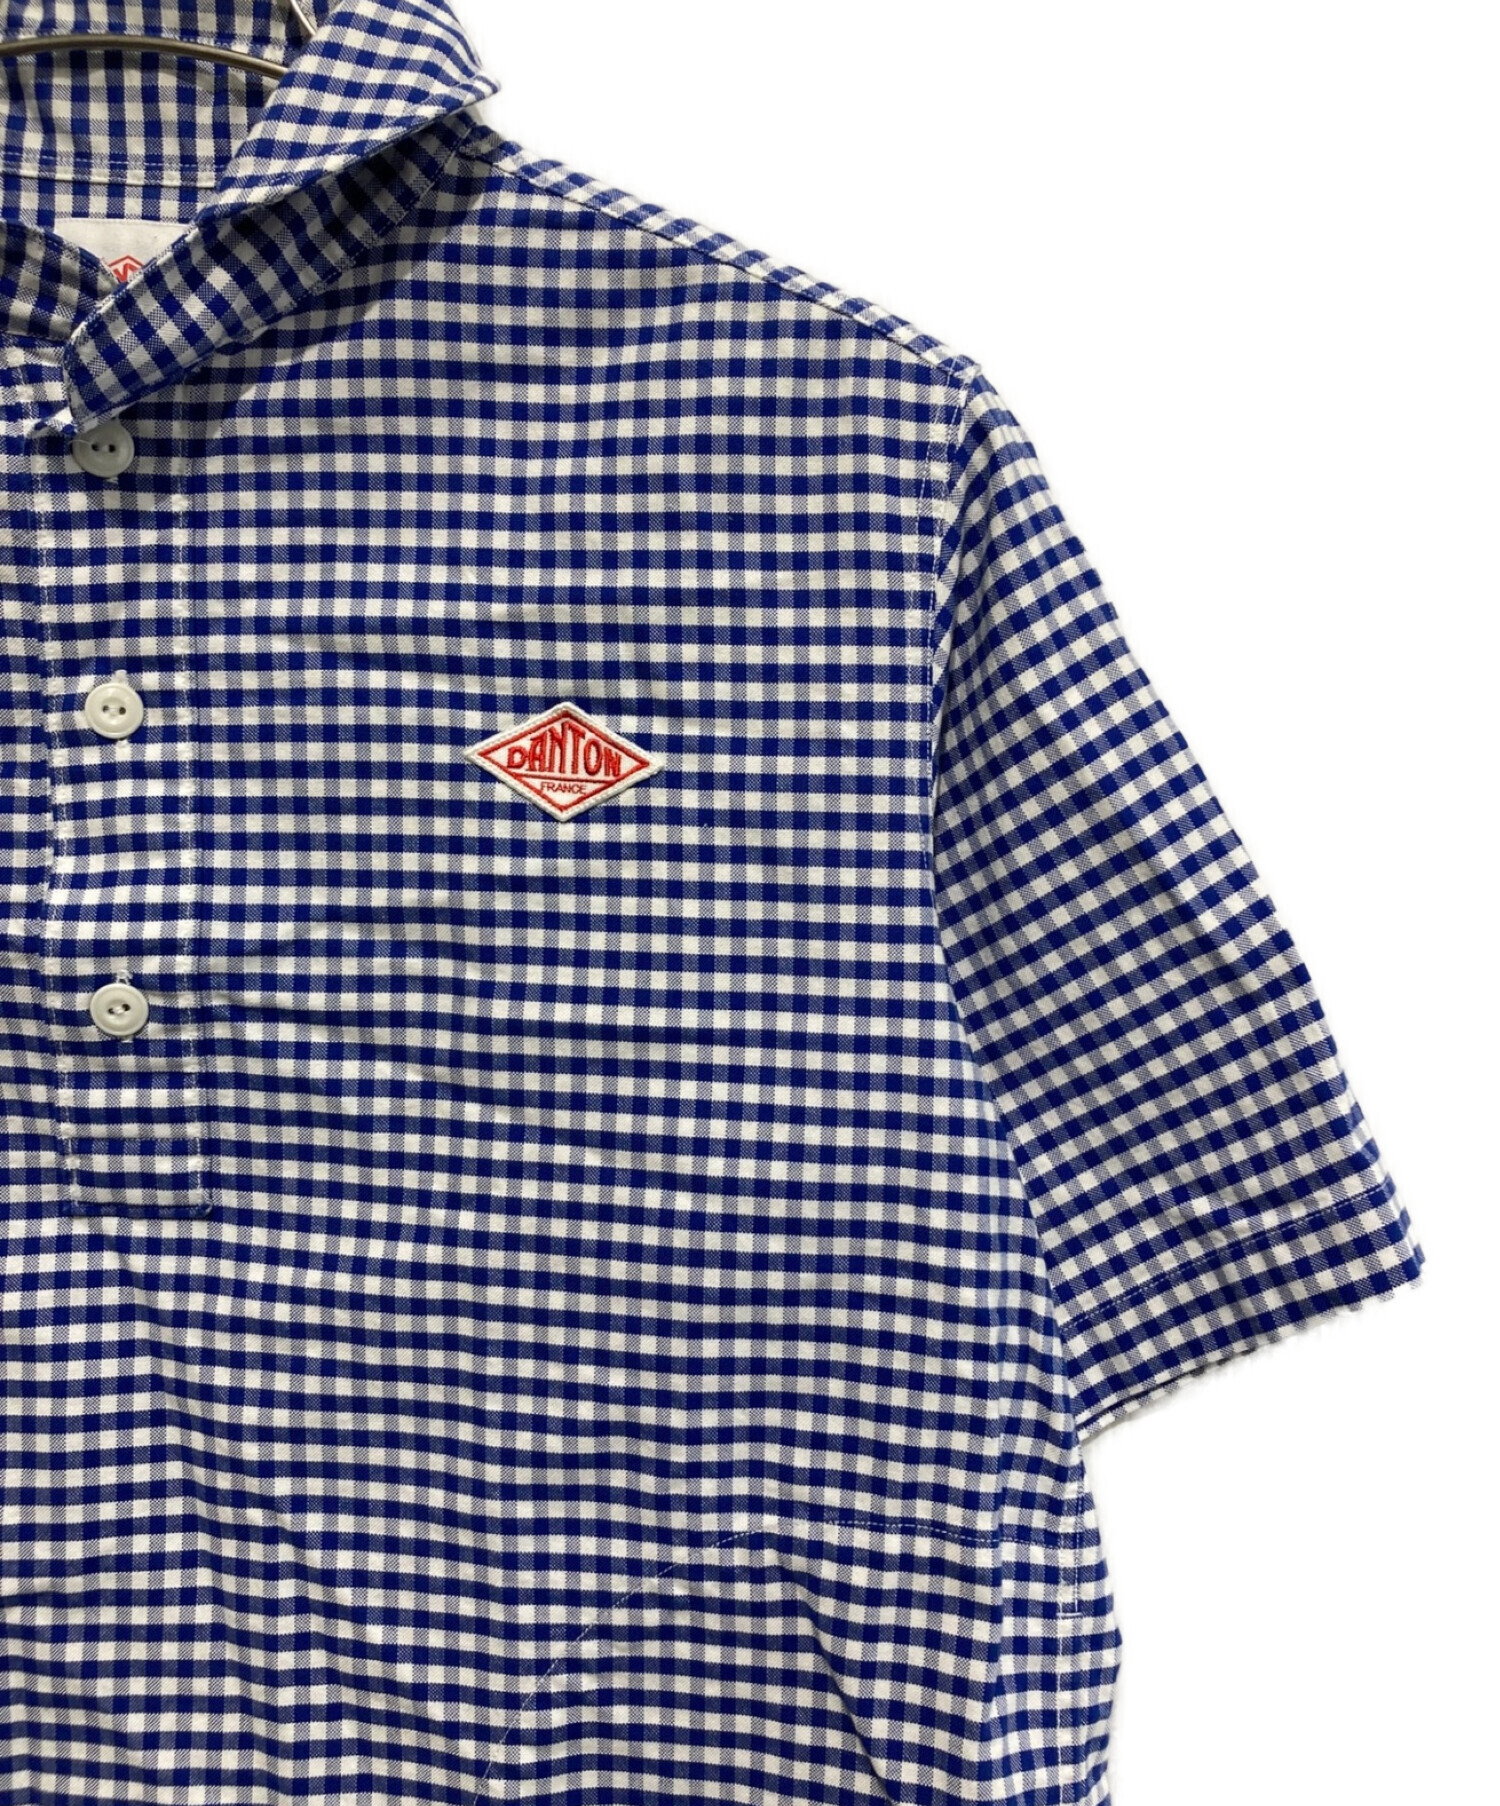 DANTON (ダントン) 丸襟ポケット付プルオーバー 半袖シャツ ブルー サイズ:SIZE 34